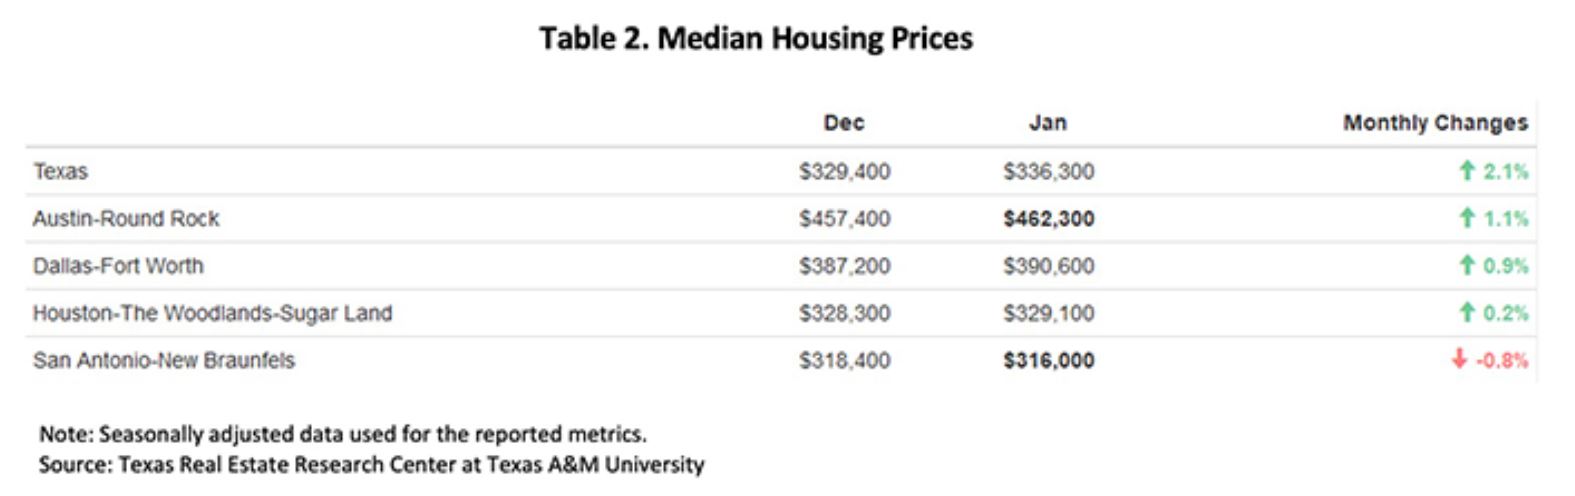 Texas Housing Price Trends 